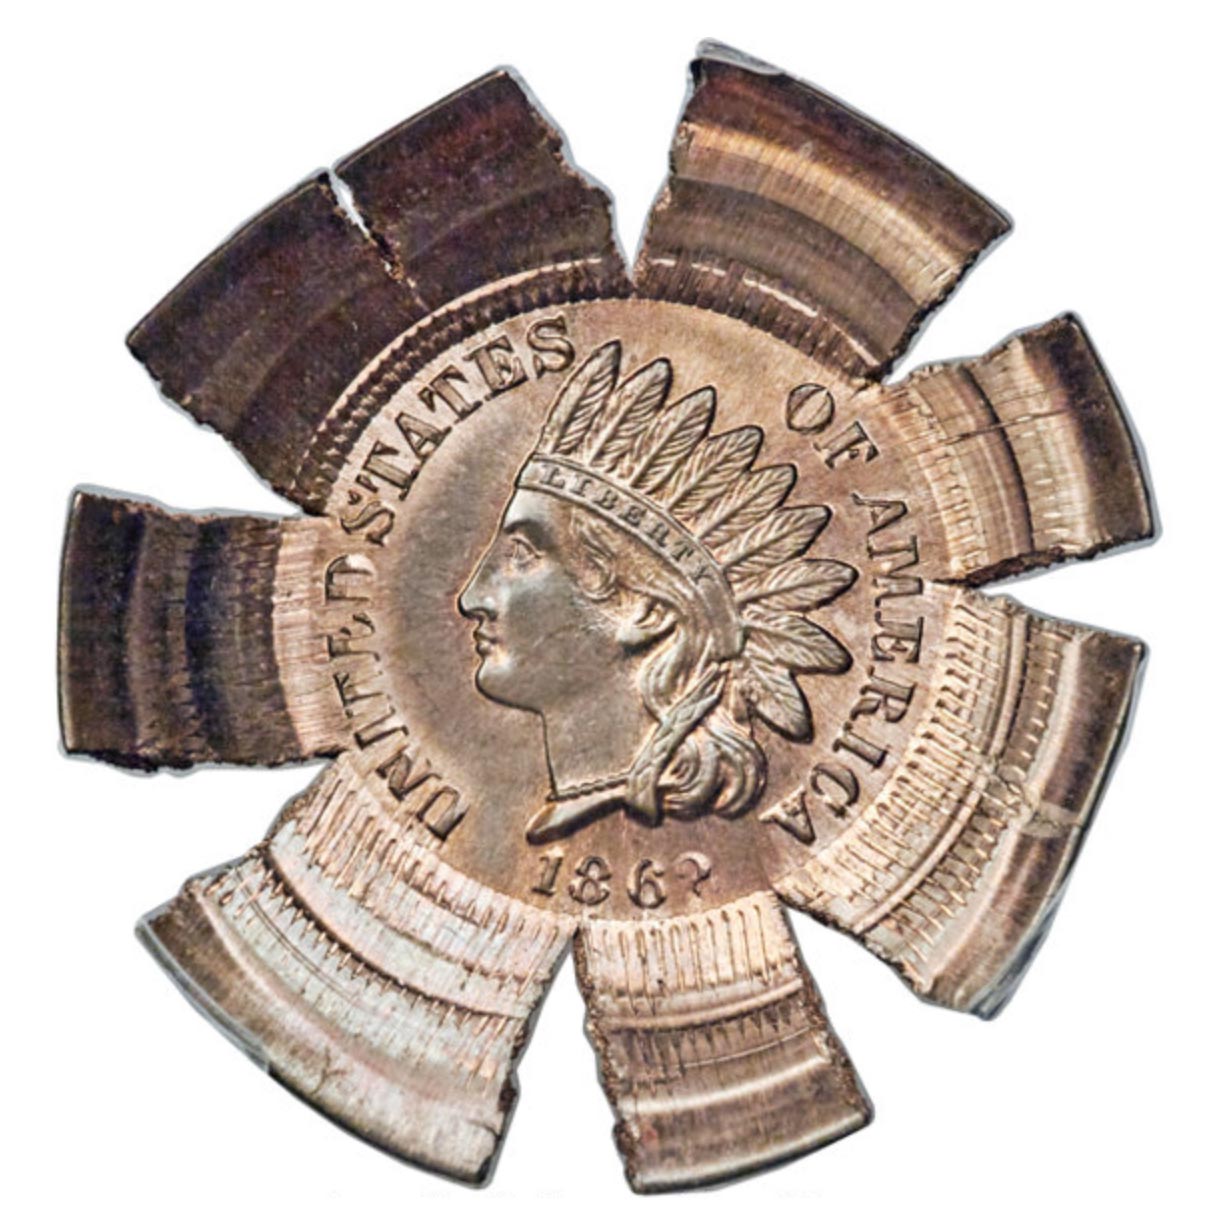 1862 Indian Head Cent Die Cap Error. Image: Heritage Auctions.